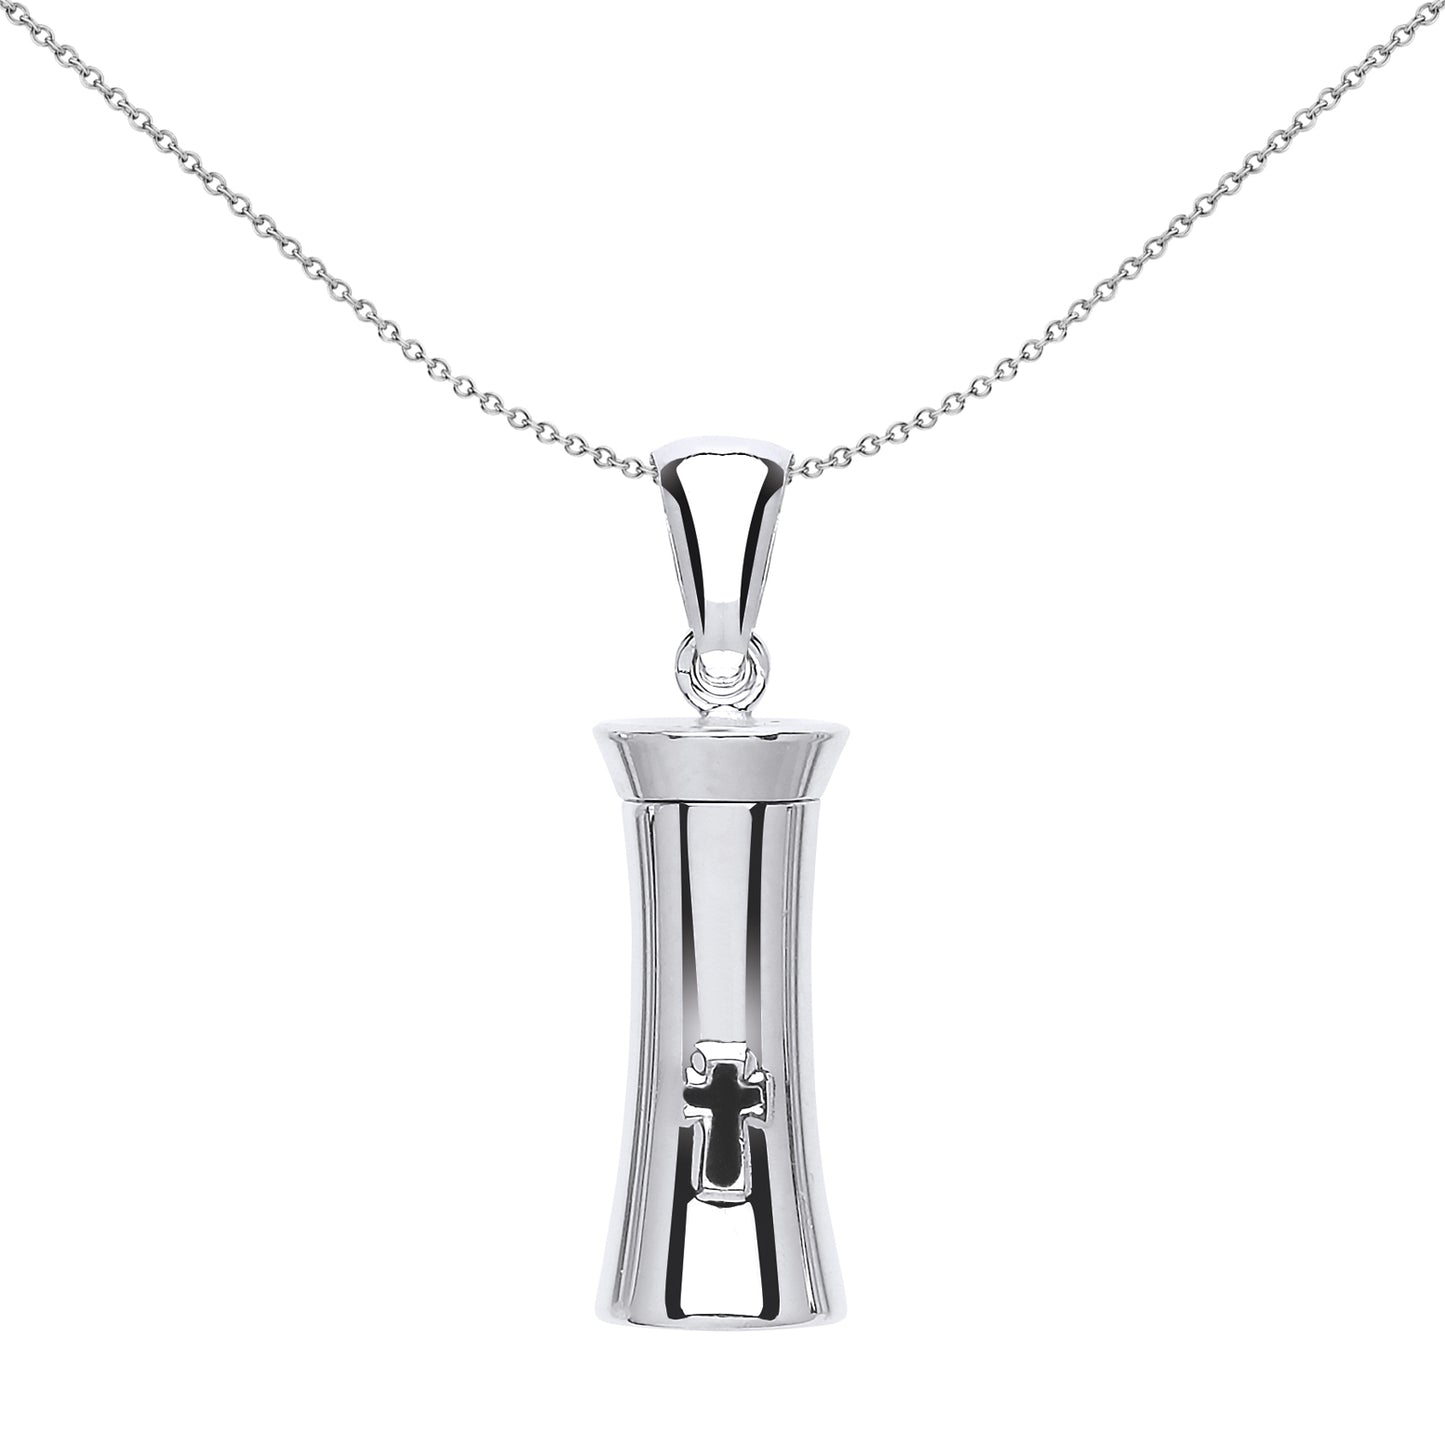 Silver  Cross Cremation Urn Locket Necklace 18 inch - GVP423